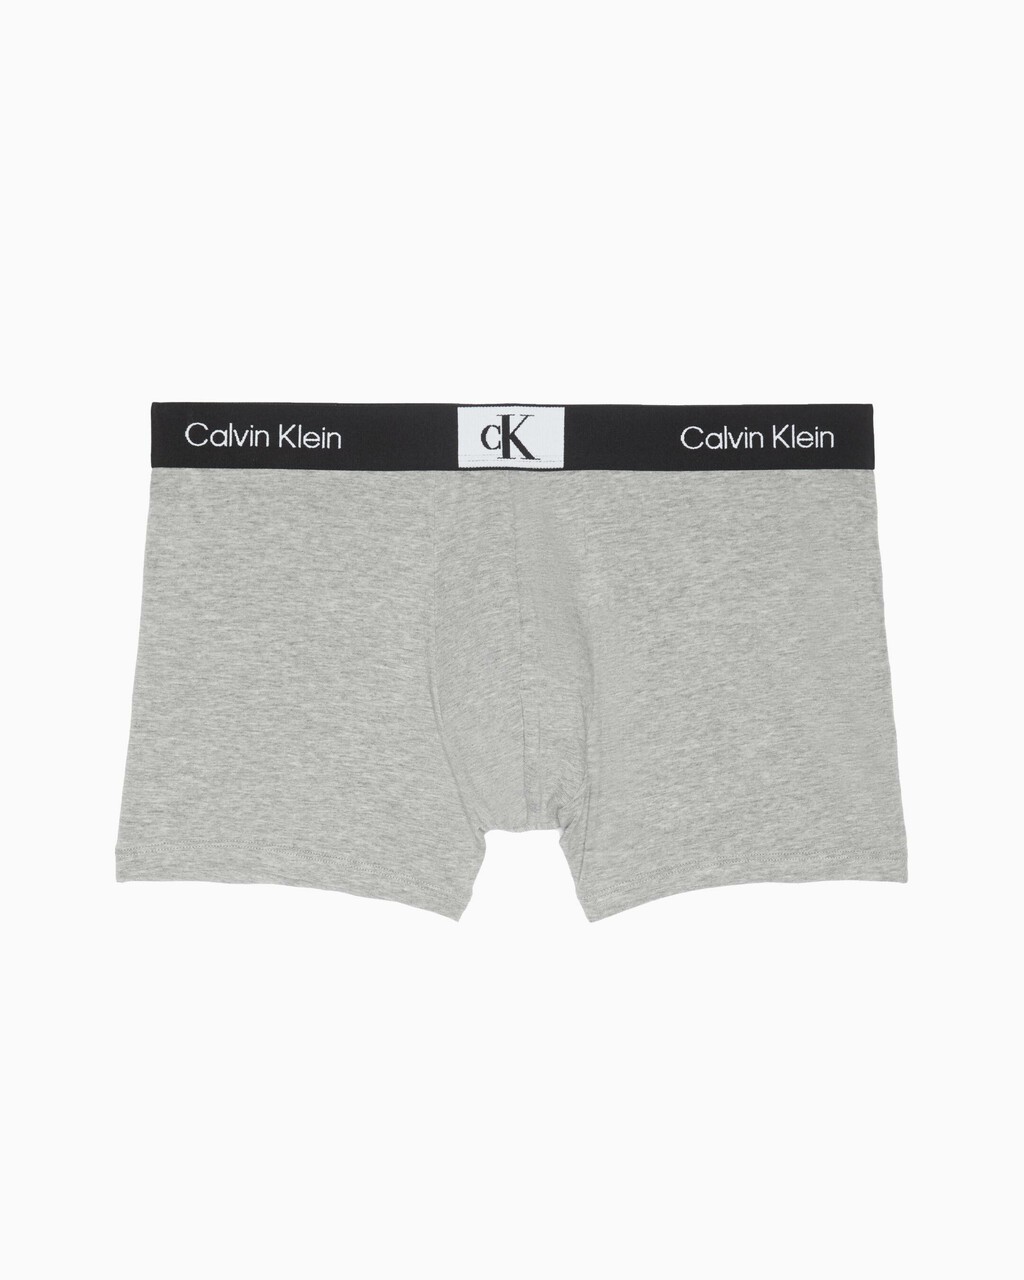 CALVIN KLEIN 1996 平角內褲, Grey Heather, hi-res